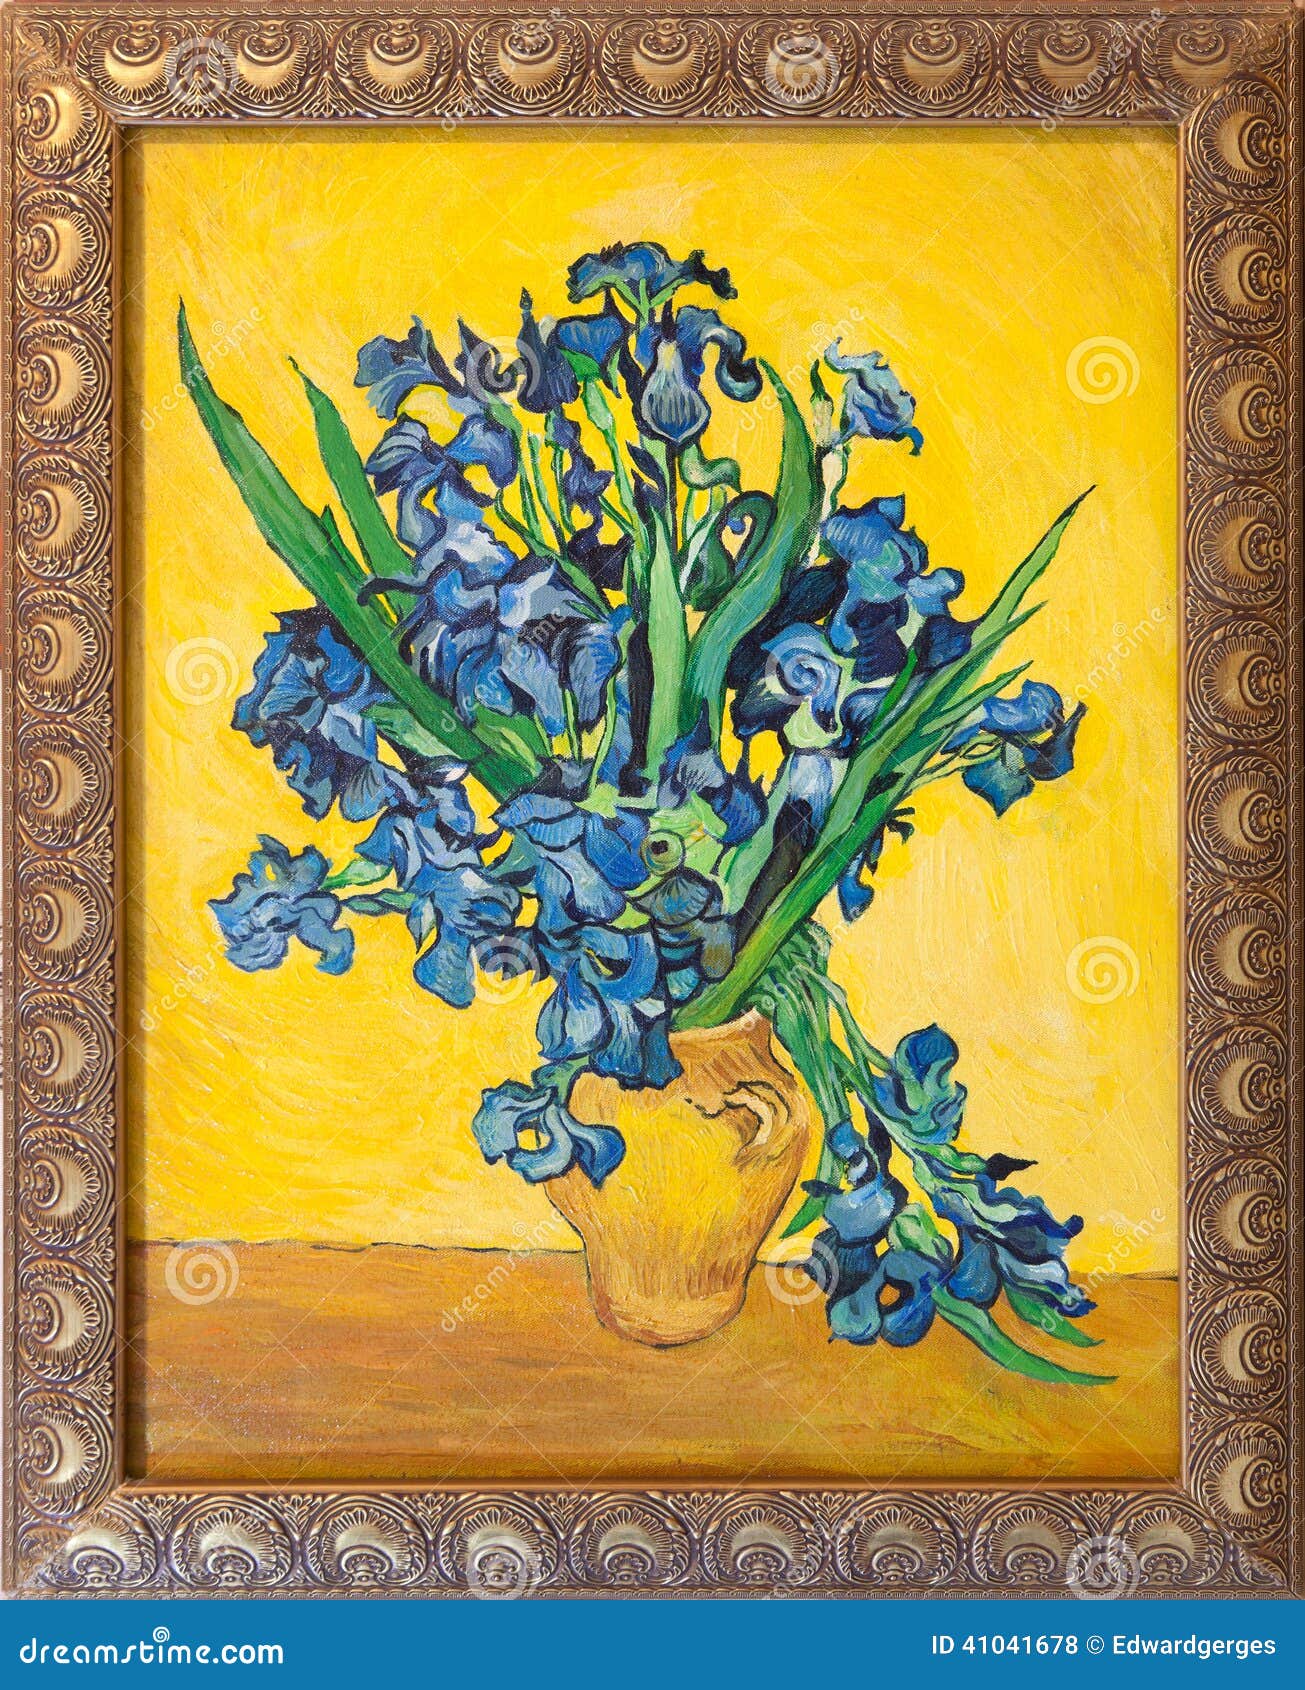 Van Gogh Irises Painting Editorial Stock Photo - Image: 41041678